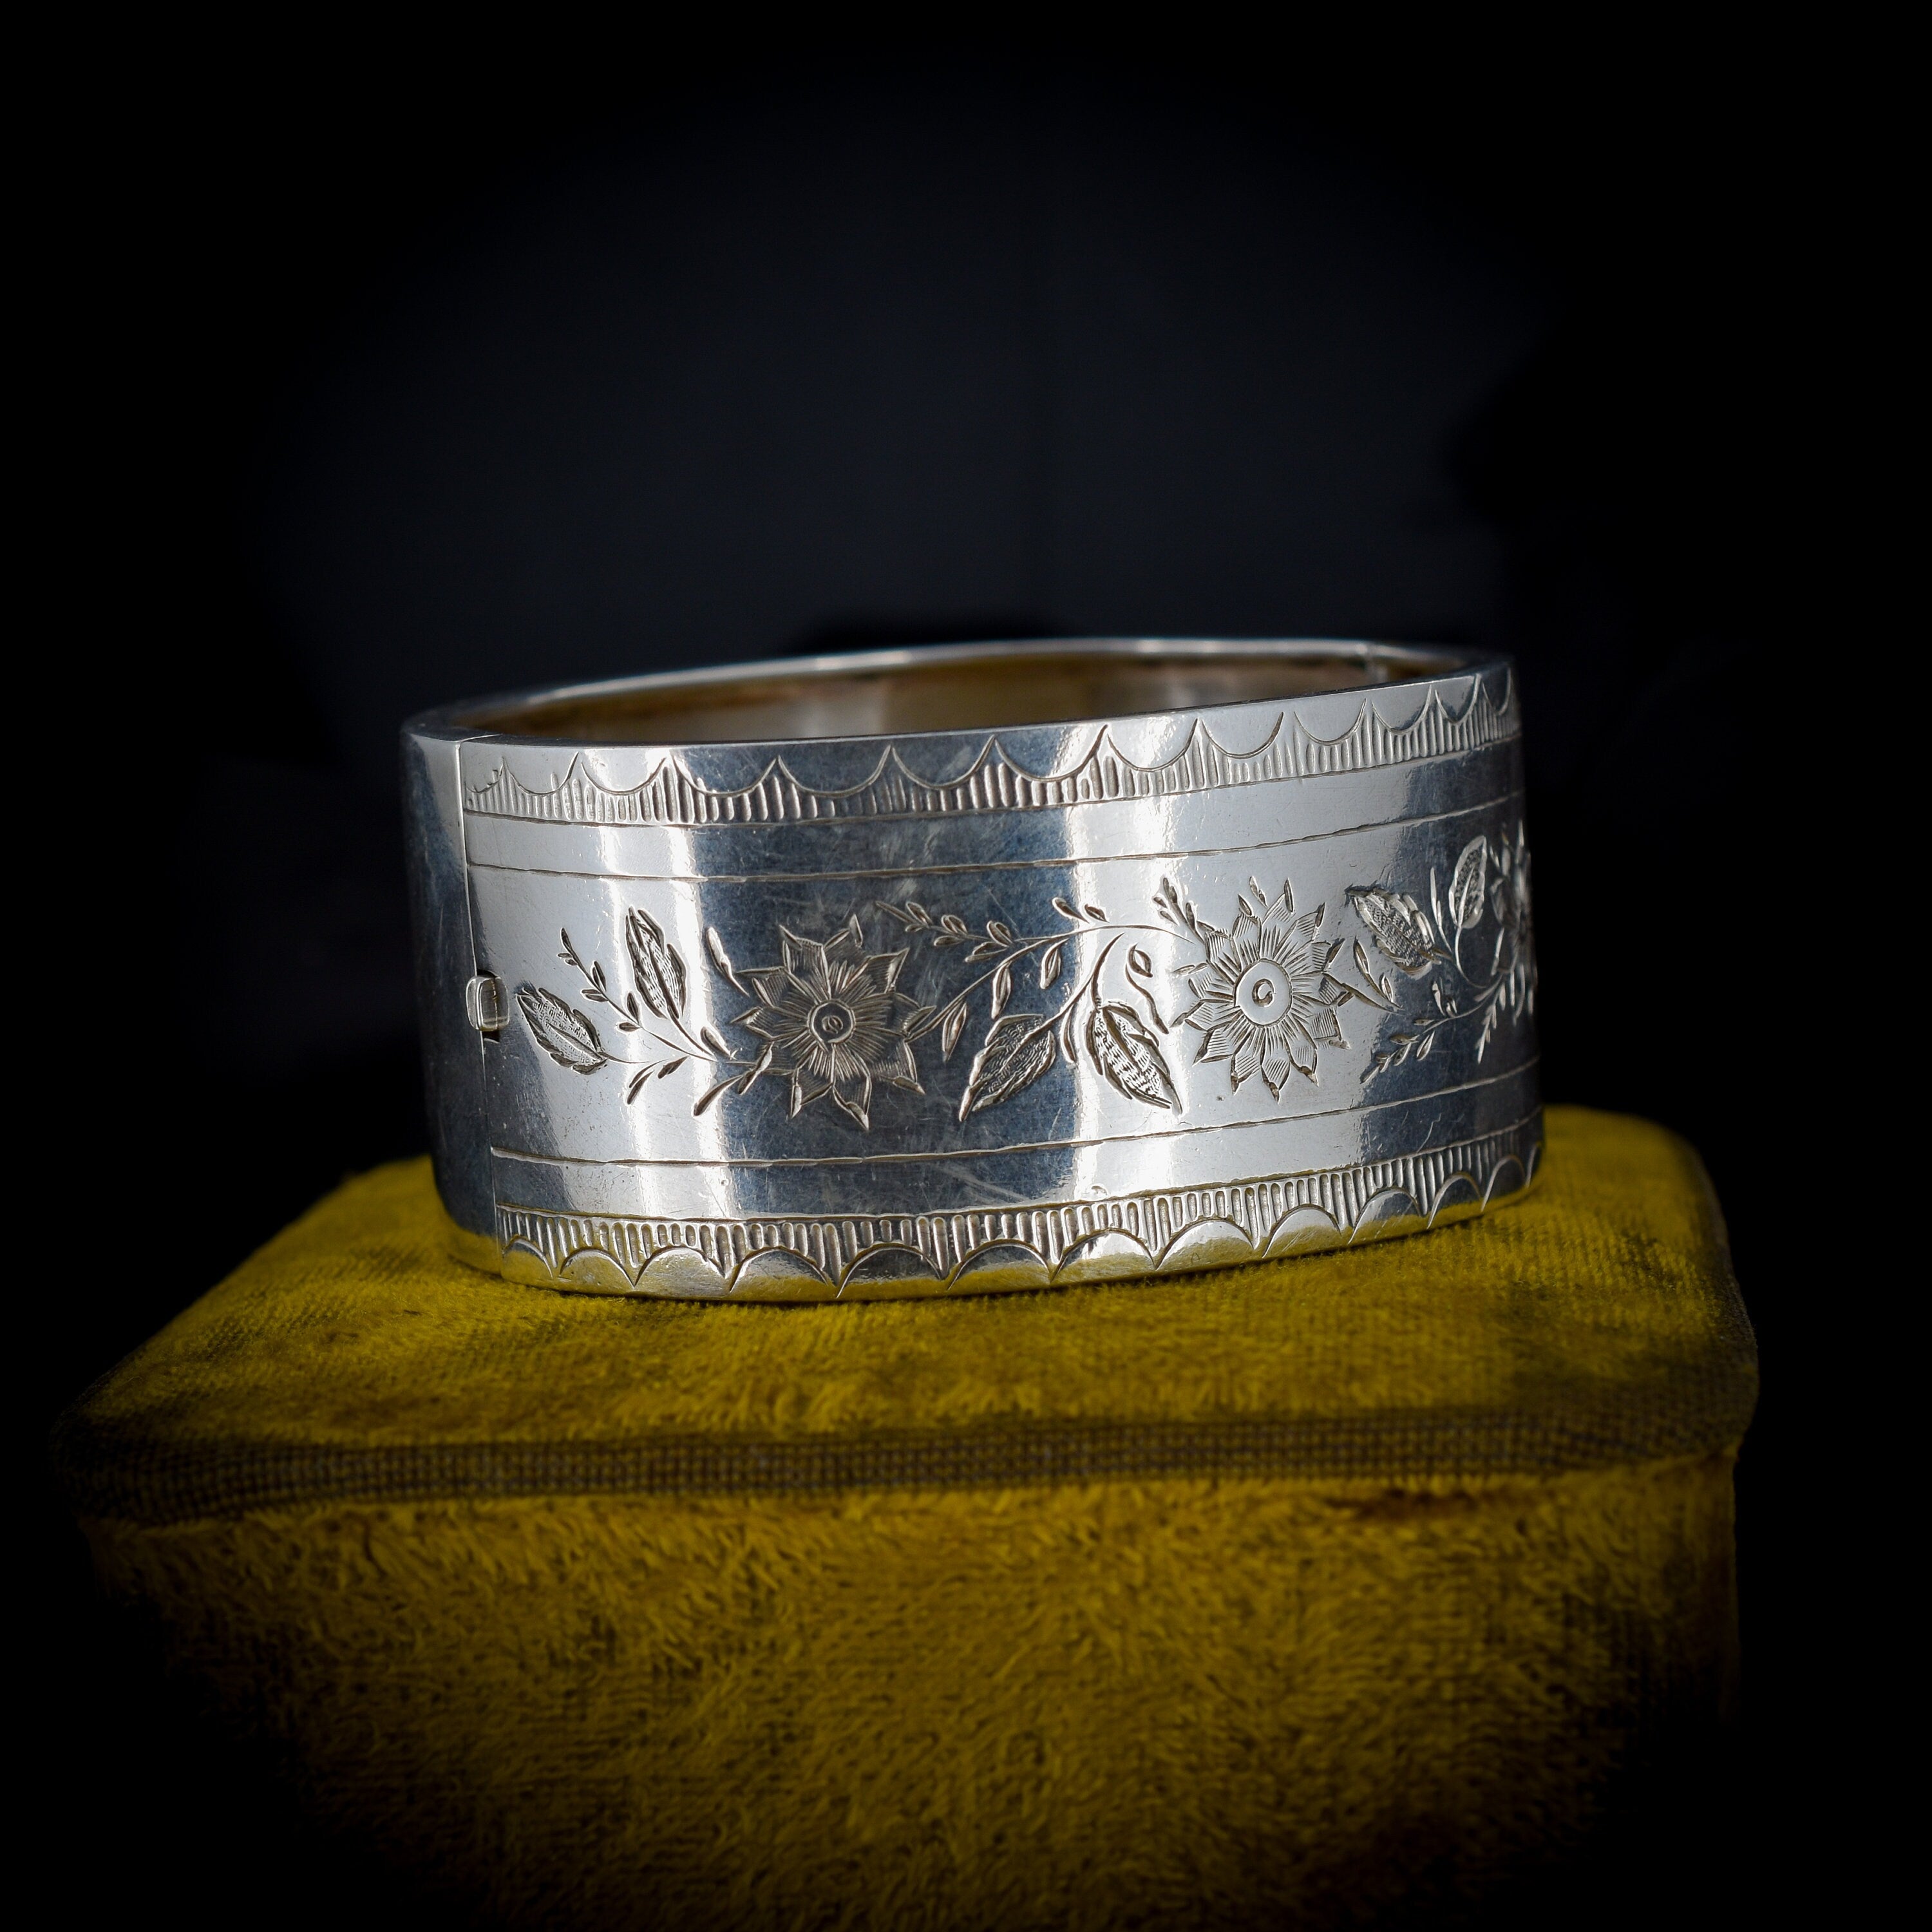 Trinny Silver Bone Cuff Bracelet, Silver Wide Cuff Bangle Bracelet | eBay